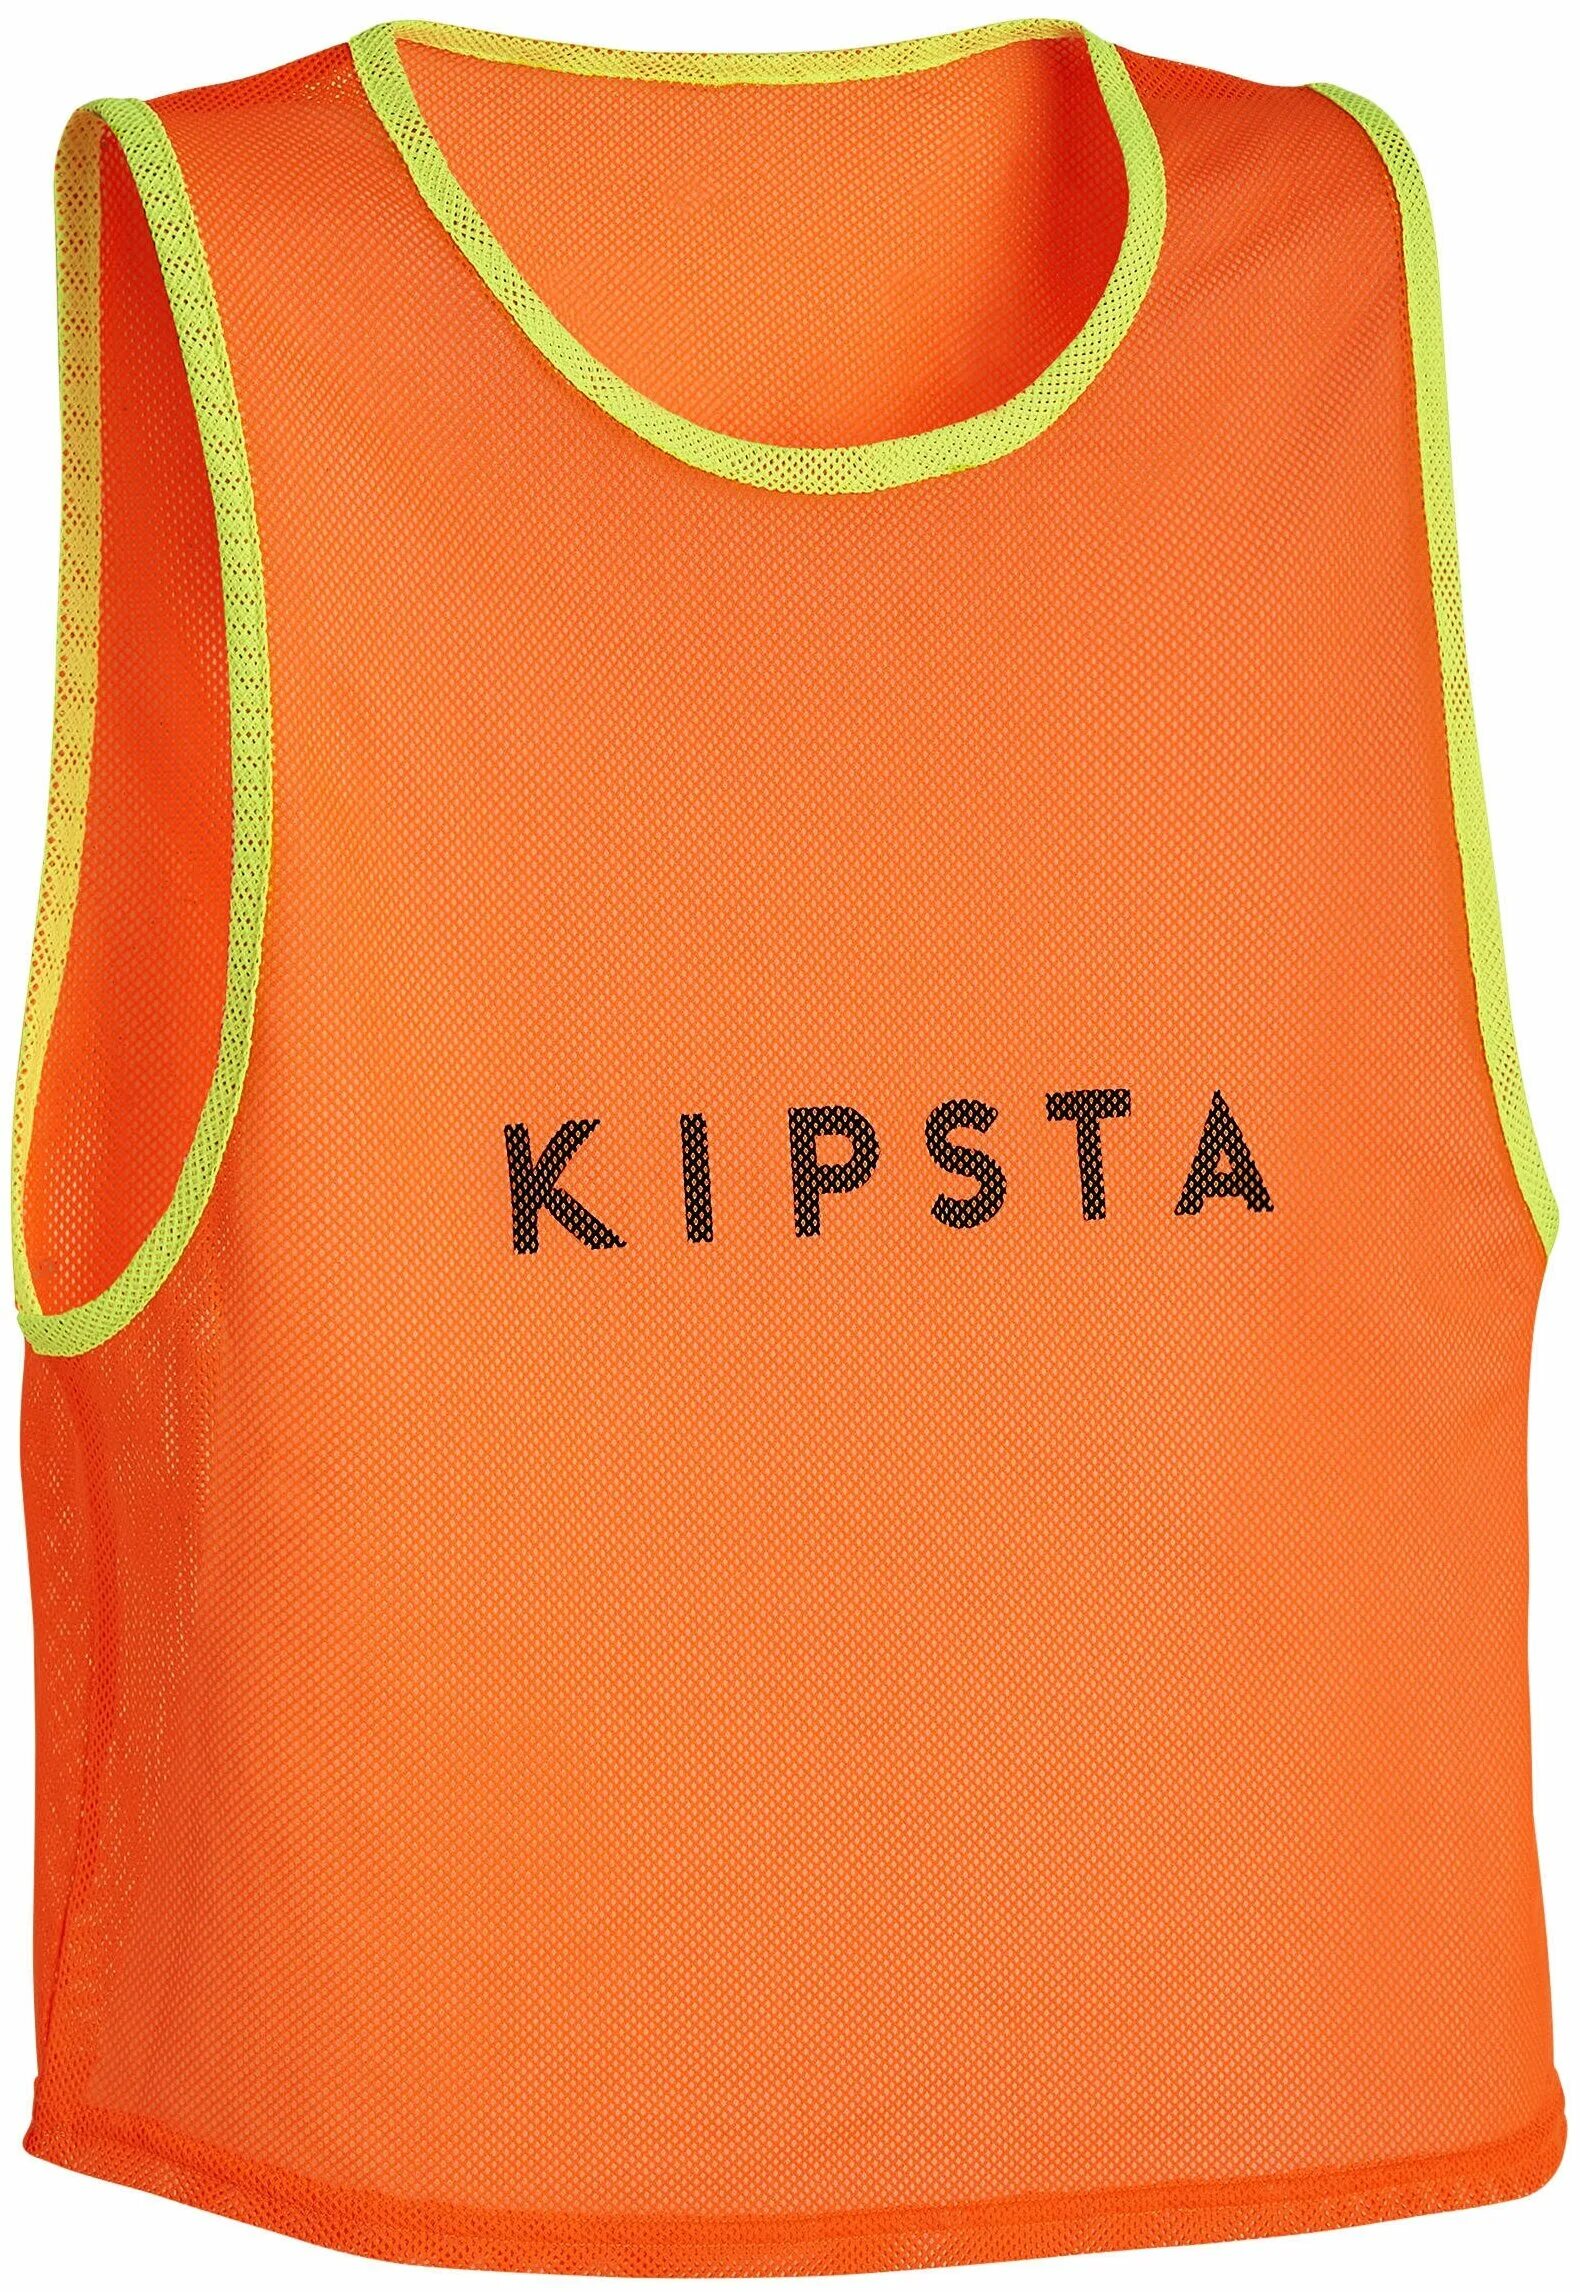 Манишка KIPSTA. Манишка спортивная KIPSTA. Манишка детская KIPSTA. Манишки футбольные KIPSTA оранжевые. Манишка для футбола